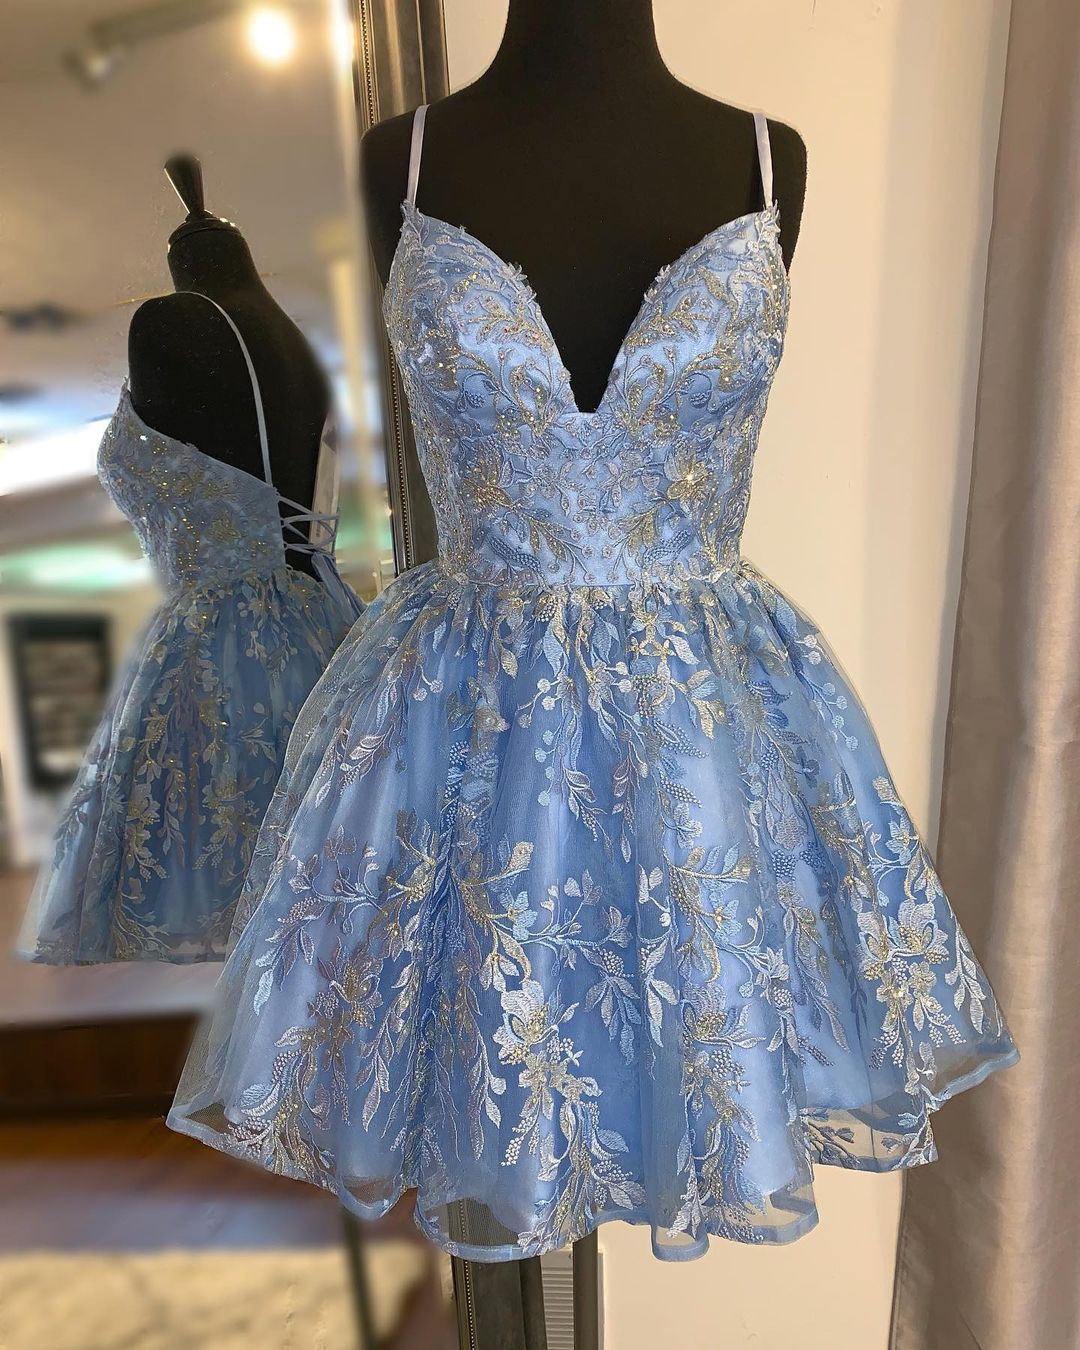 Lacy strap up blue petticoat